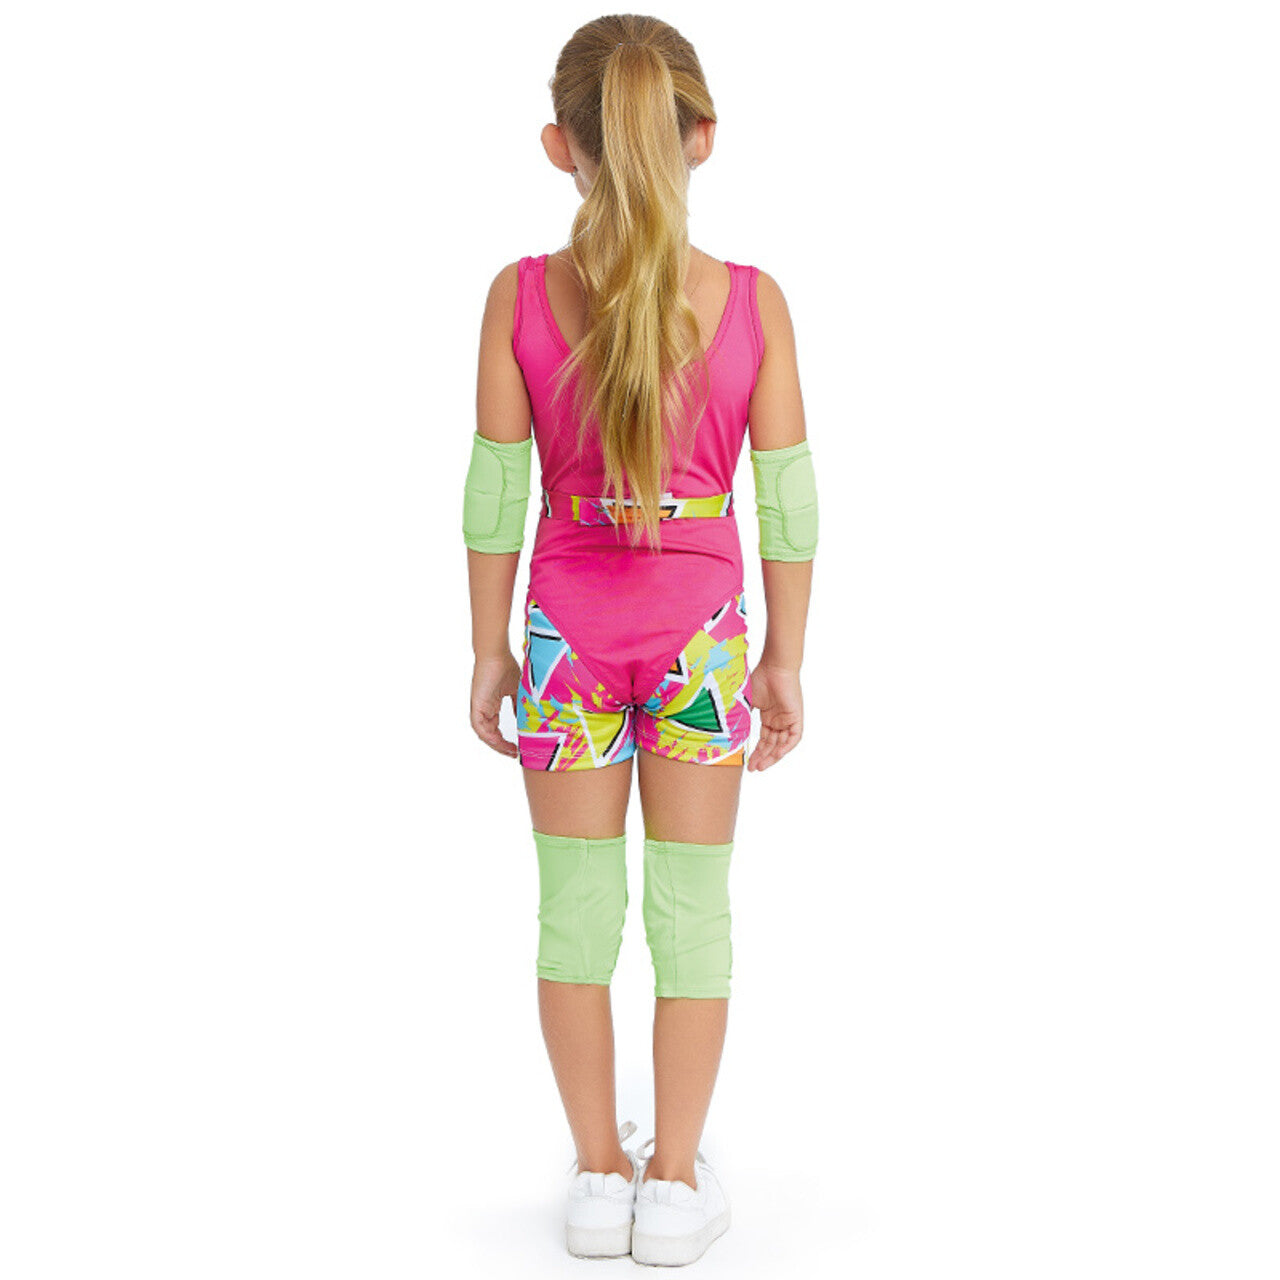 Comprar online Disfraz de Barbie Patinadora para niña